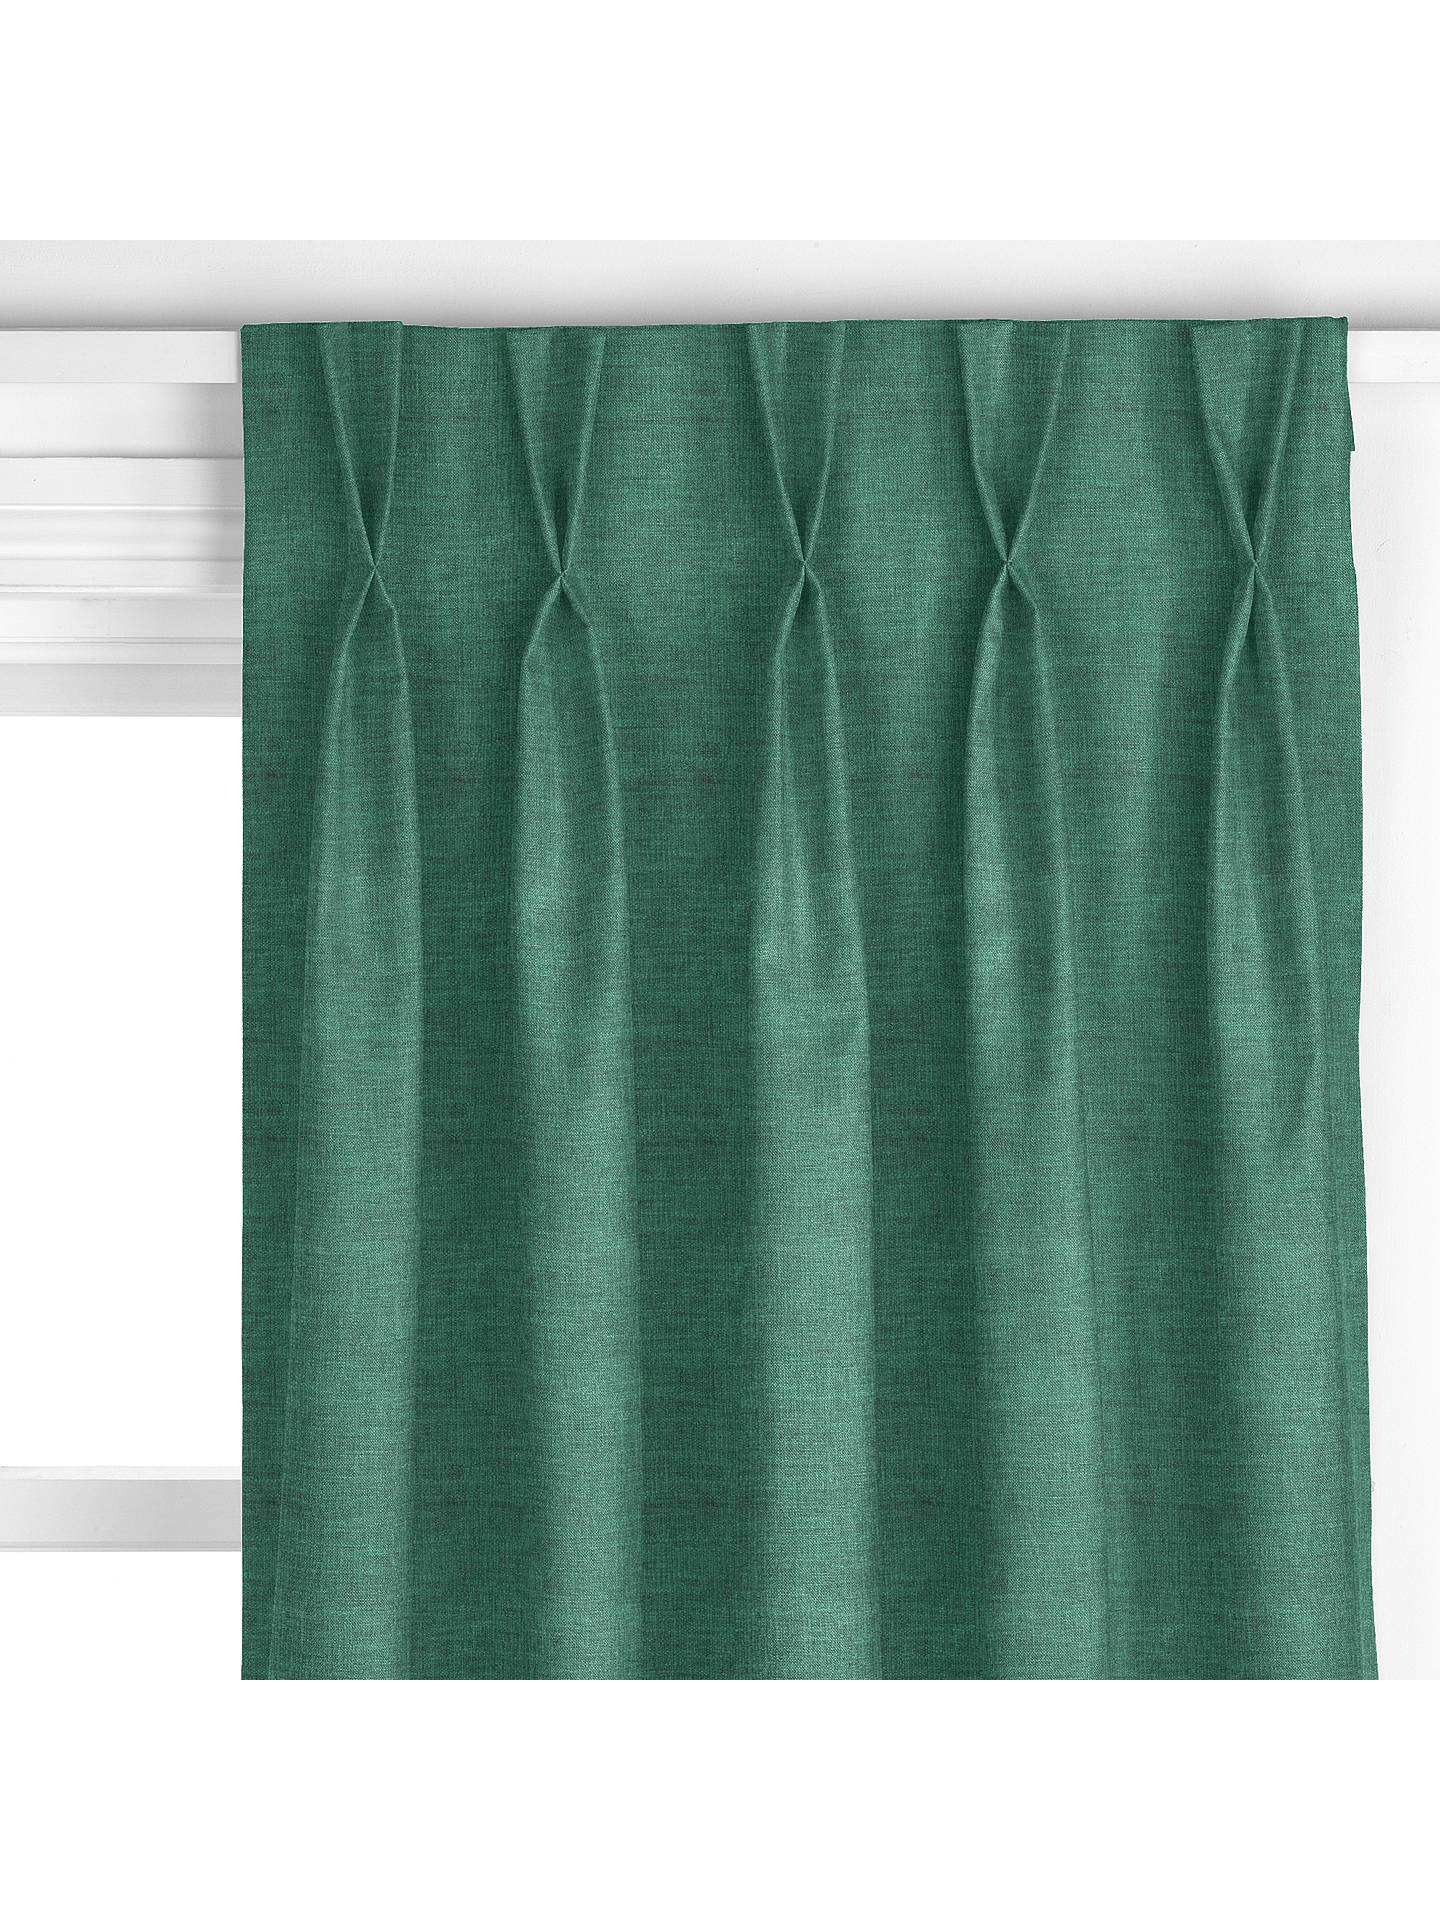 John Lewis Cotton Blend Made to Measure Curtains, Mallard